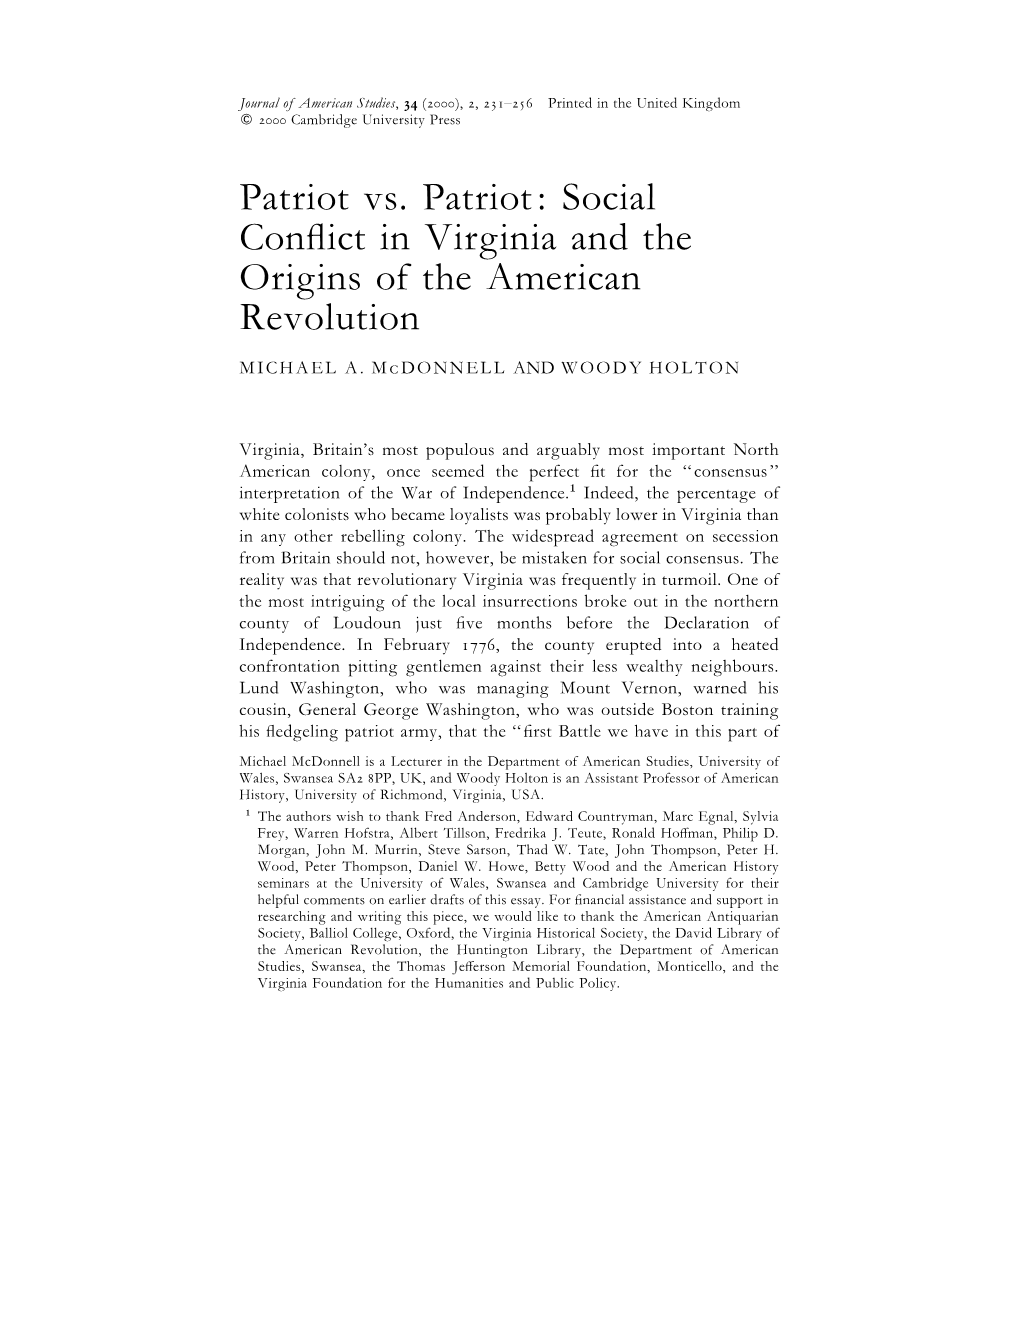 Patriot Vs. Patriot: Social Conflict in Virginia and the Origins of the American Revolution